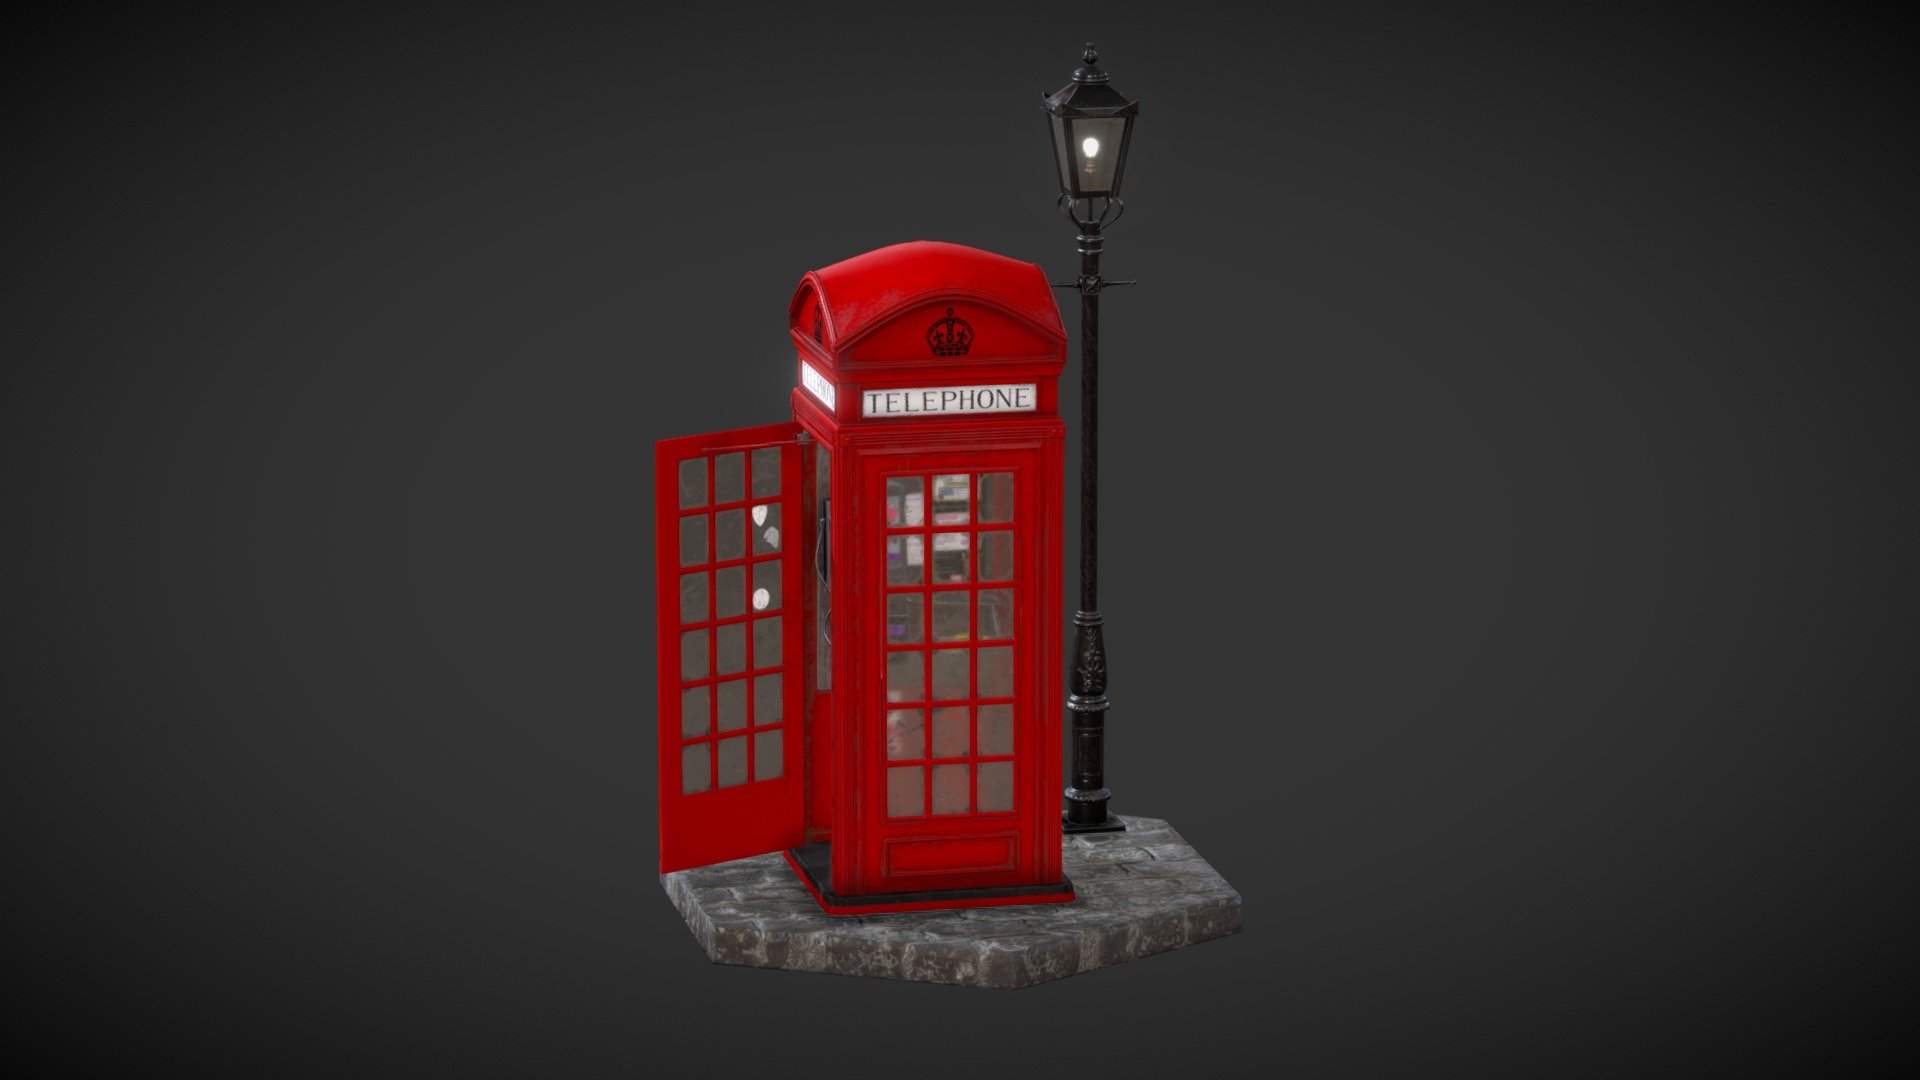 Phone both. Red Phone Booth London. Модель: Red telephone Box. Лондон телефонный будка 3d model.